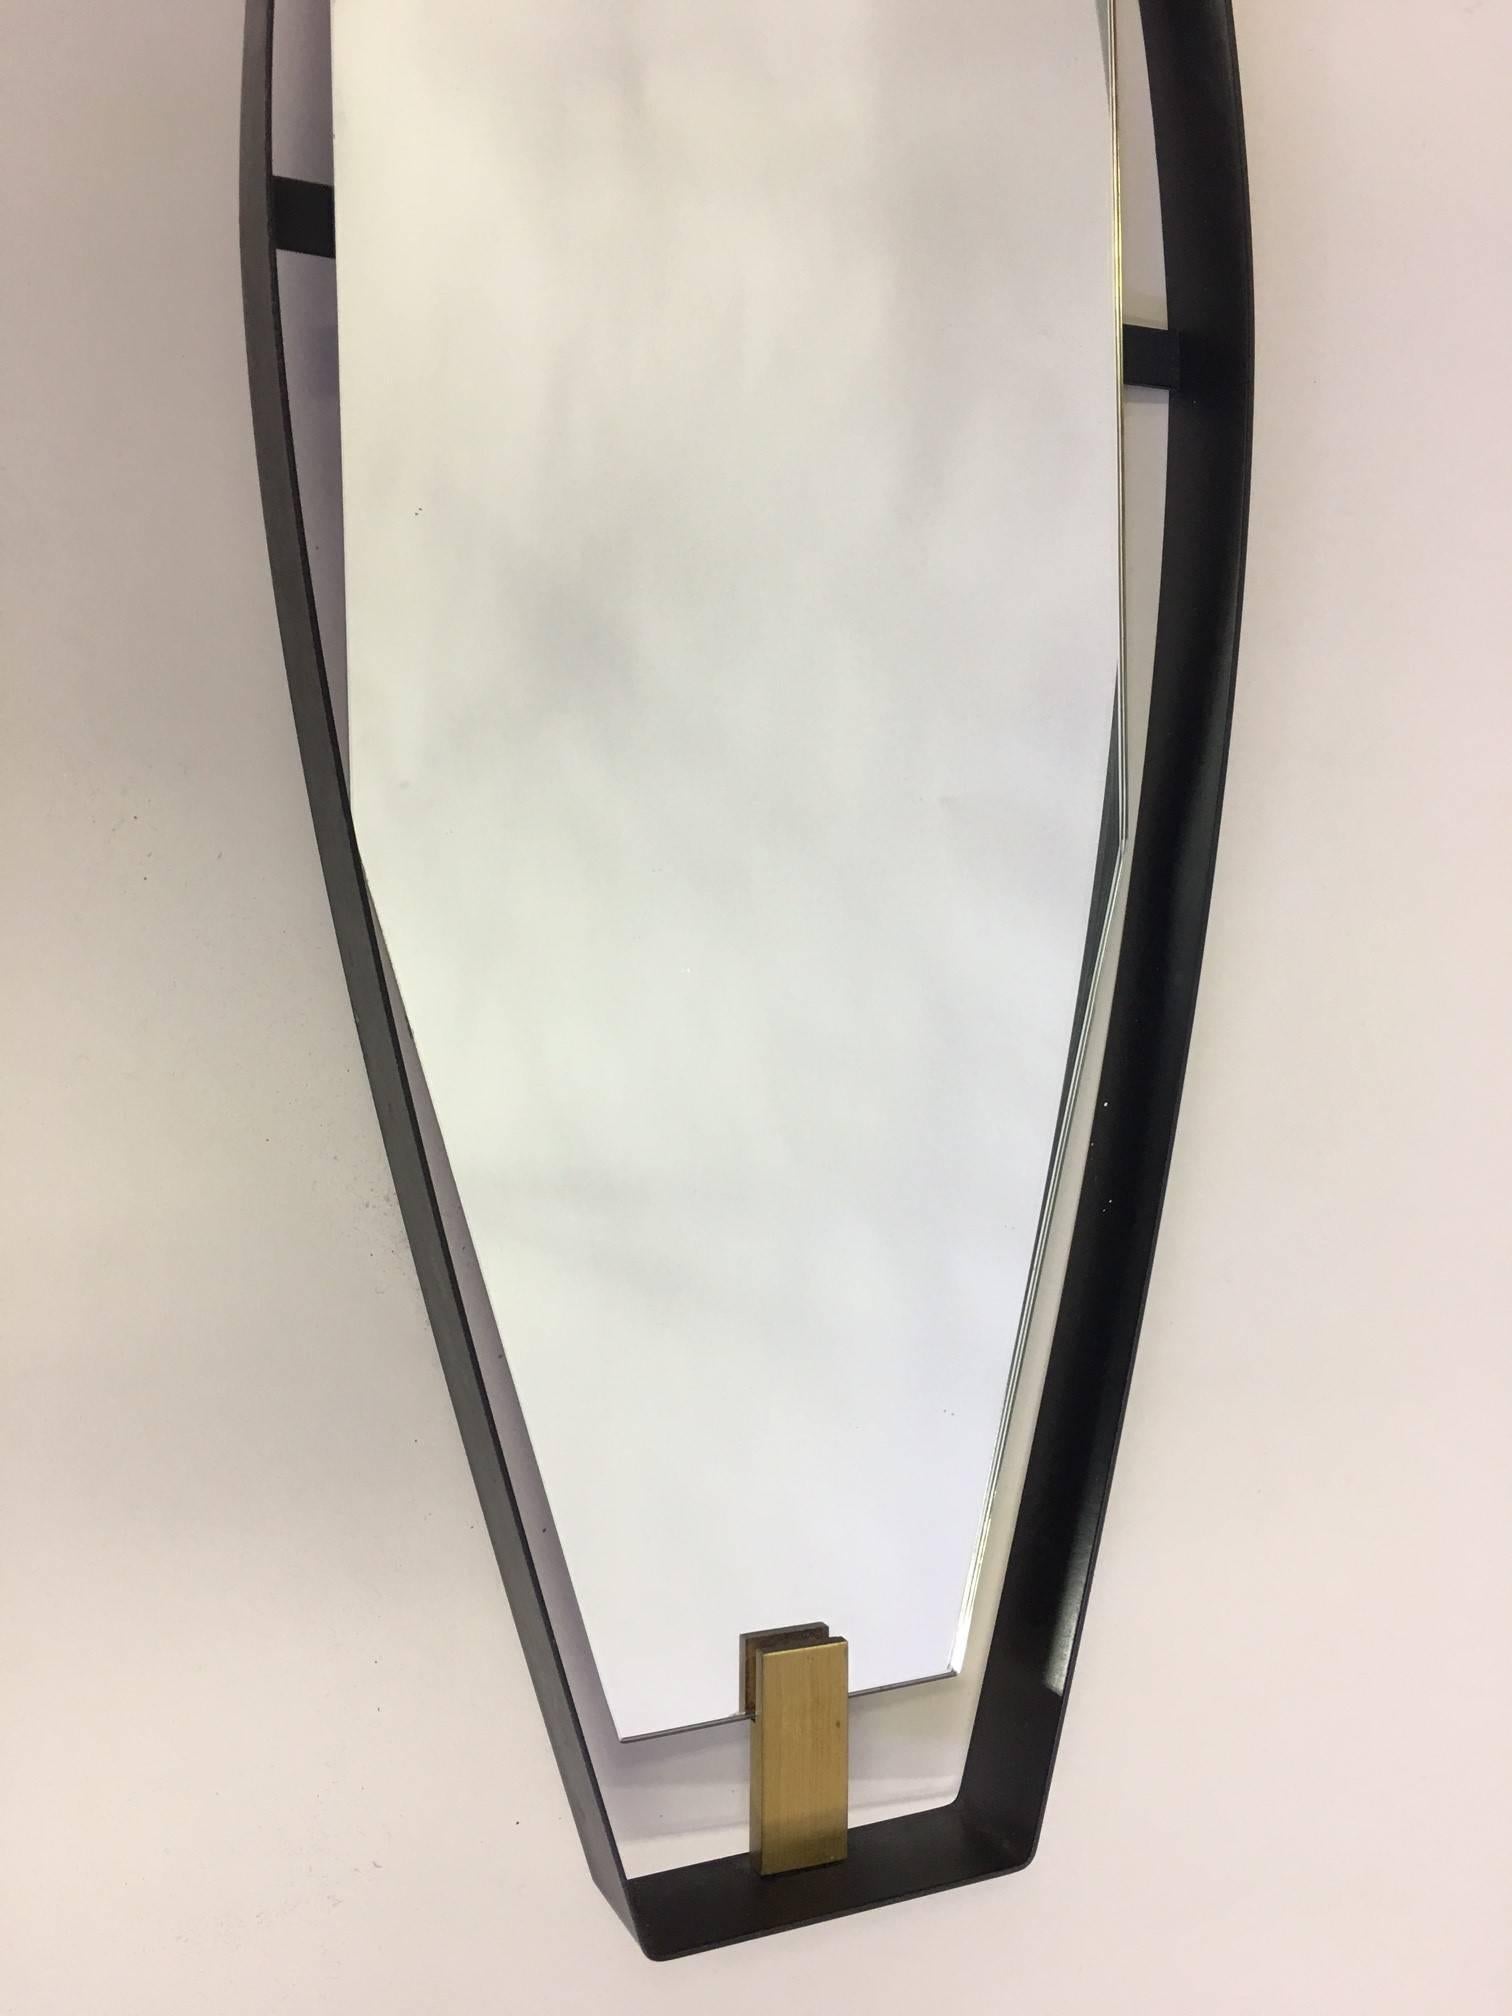 2 Rare Italian Mid-Century Modern Mirrors, Attr. to Max Ingrand for Fontana Arte For Sale 1